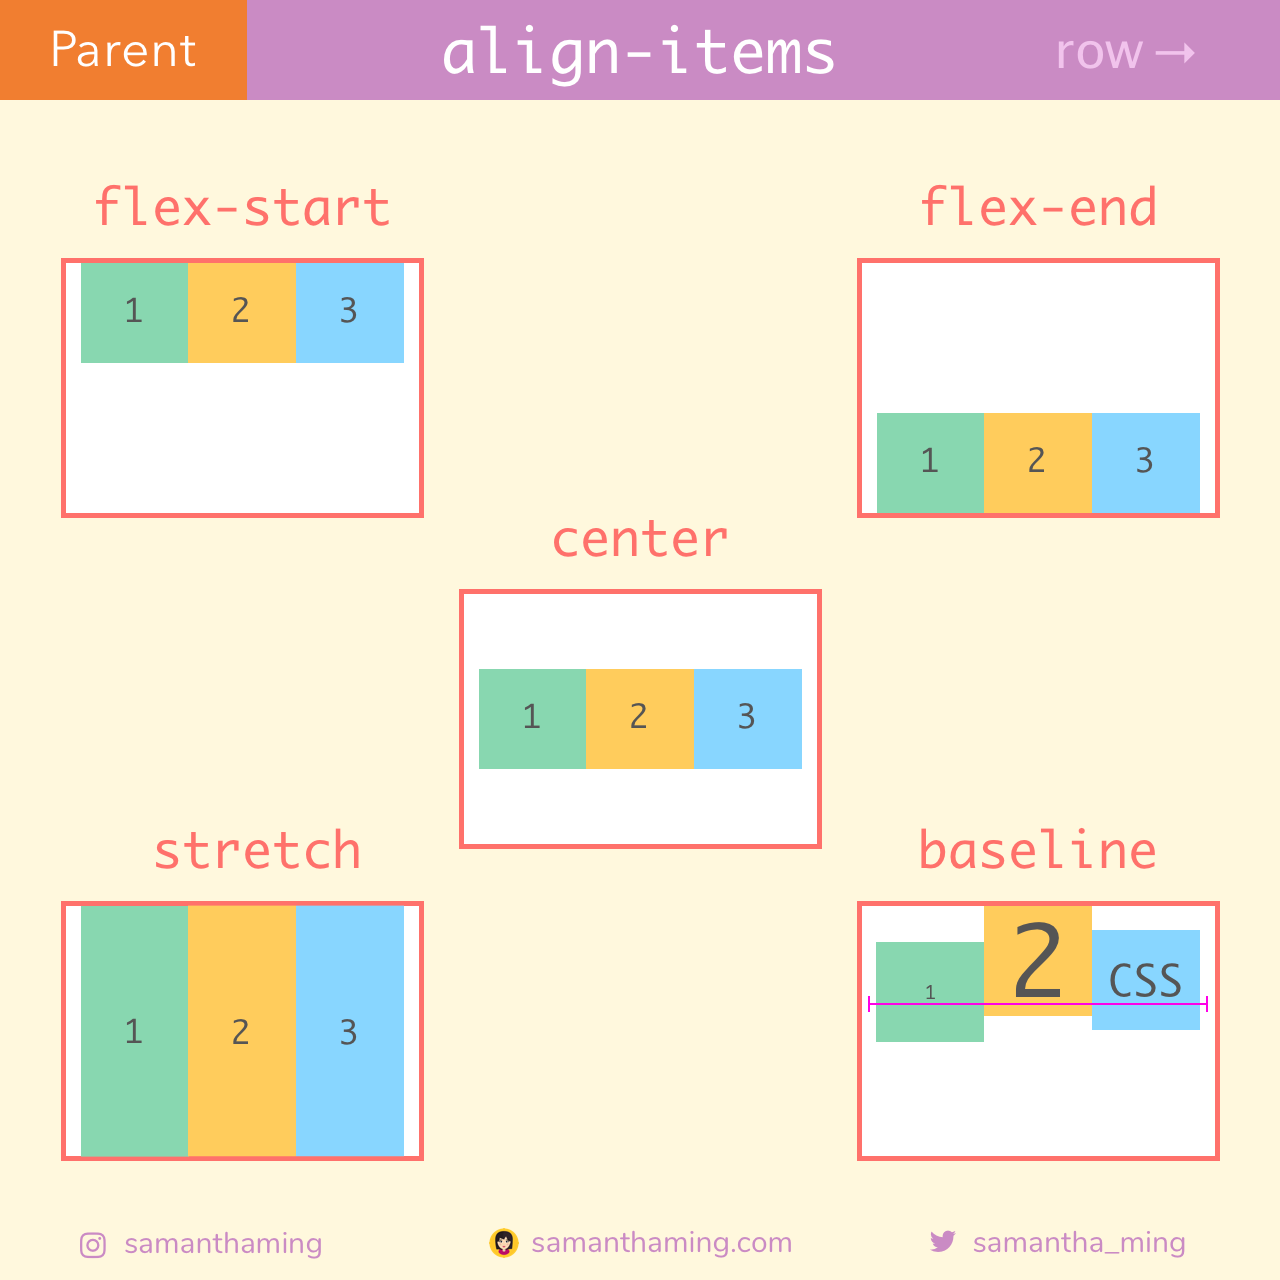 align-items row